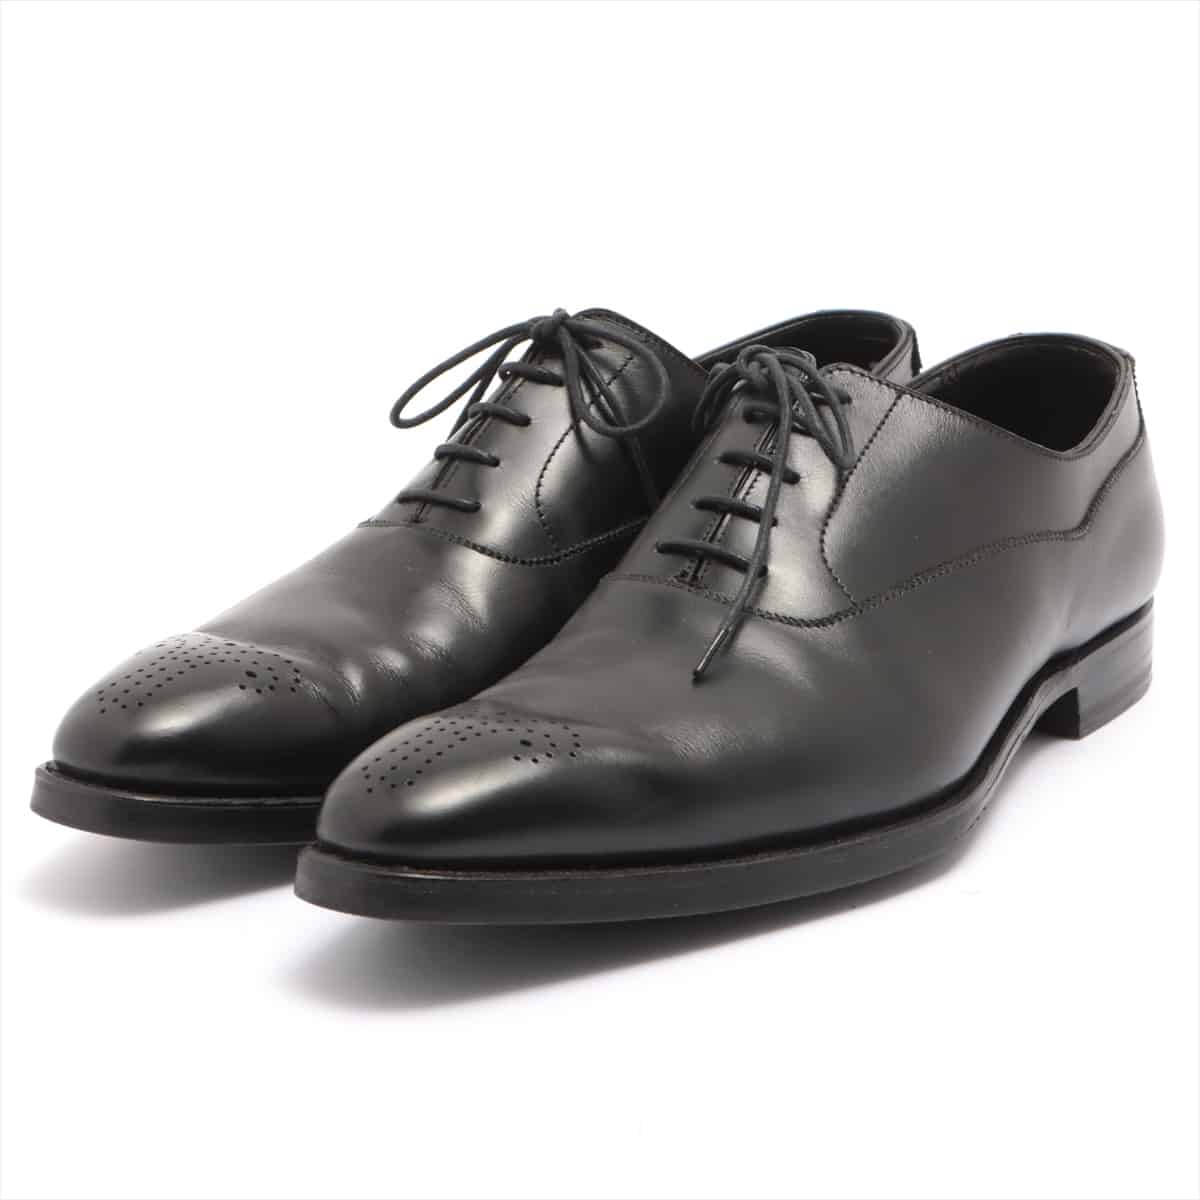 Crockett & Jones Leather Leather shoes 6E Men's Black medallions 6276